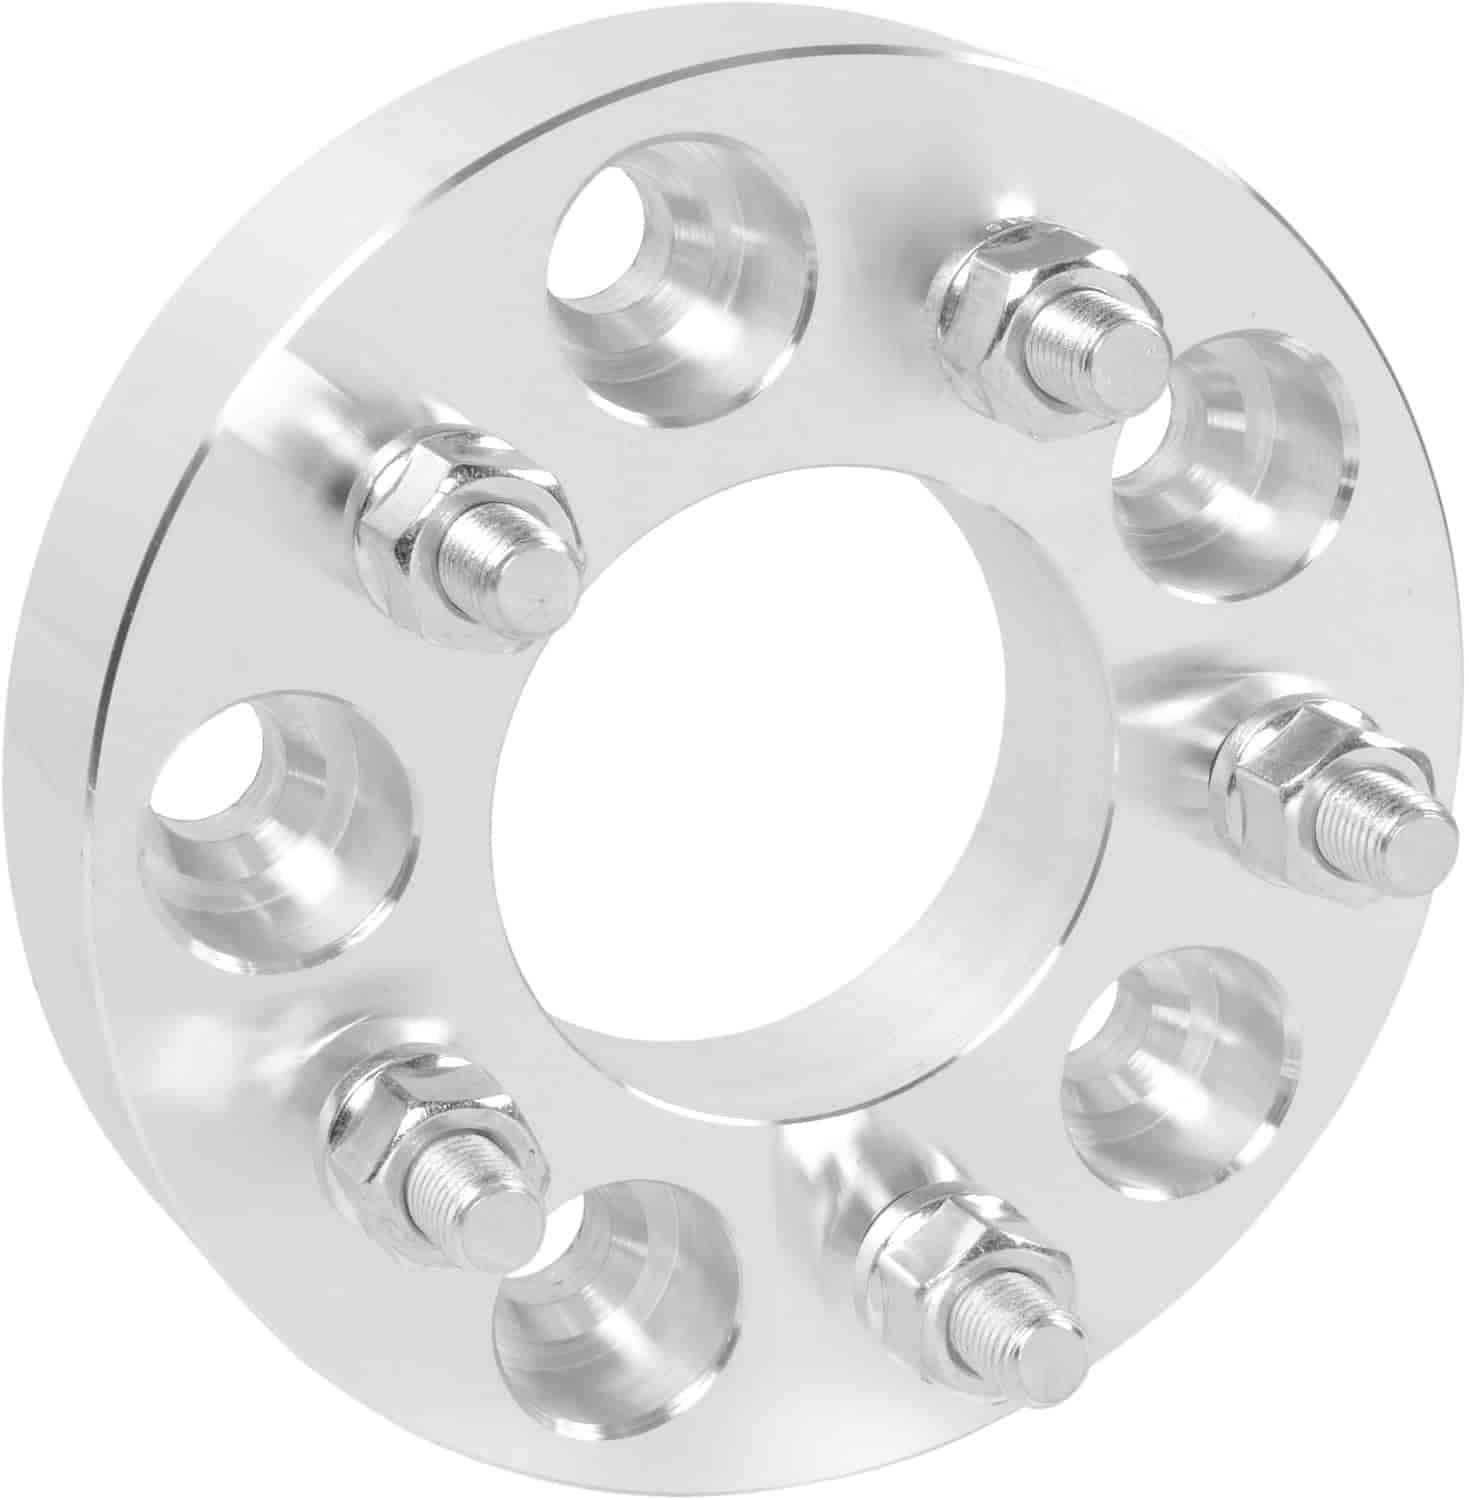 Billet Aluminum Wheel Adapter Adapts 5 x 4.75" Hub to 5 x 4.5" Wheel